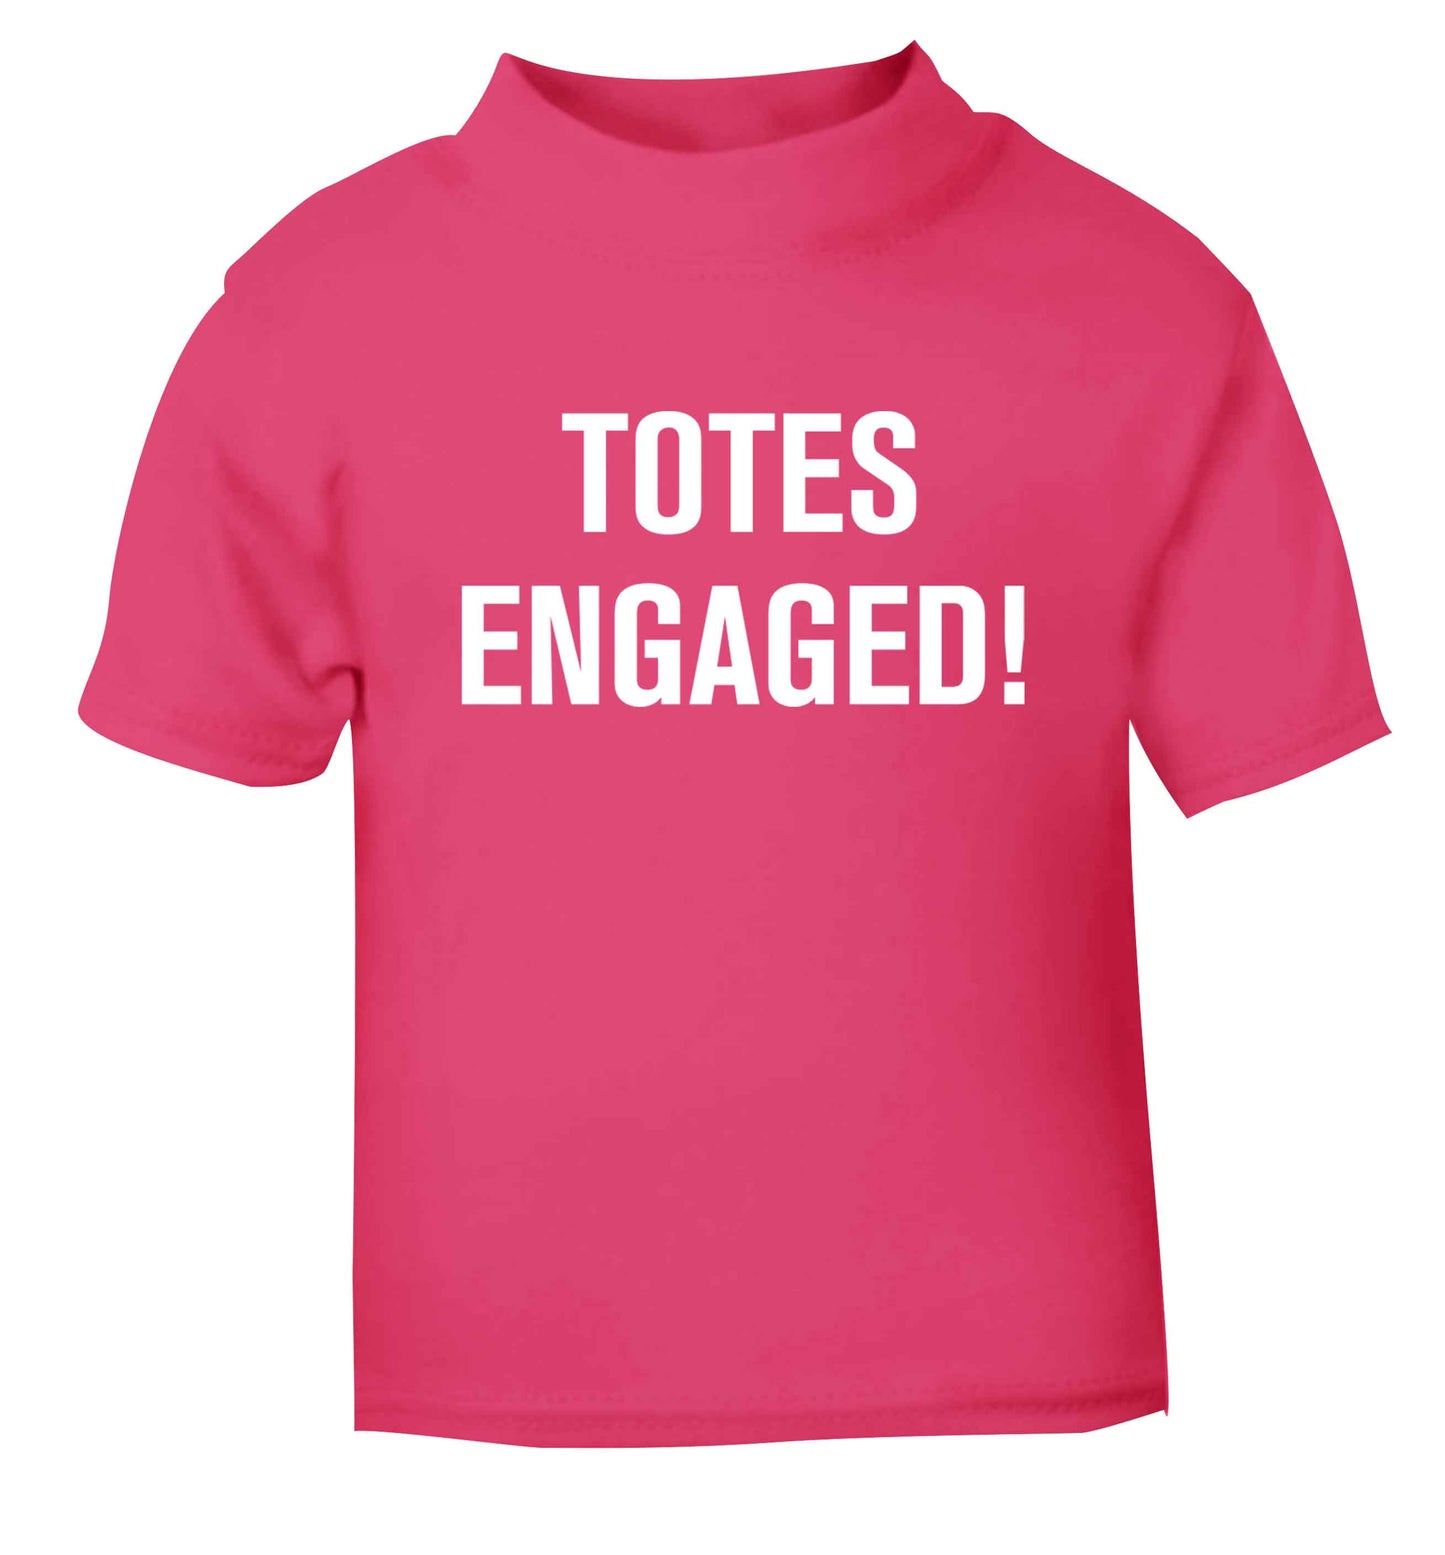 Totes engaged pink baby toddler Tshirt 2 Years